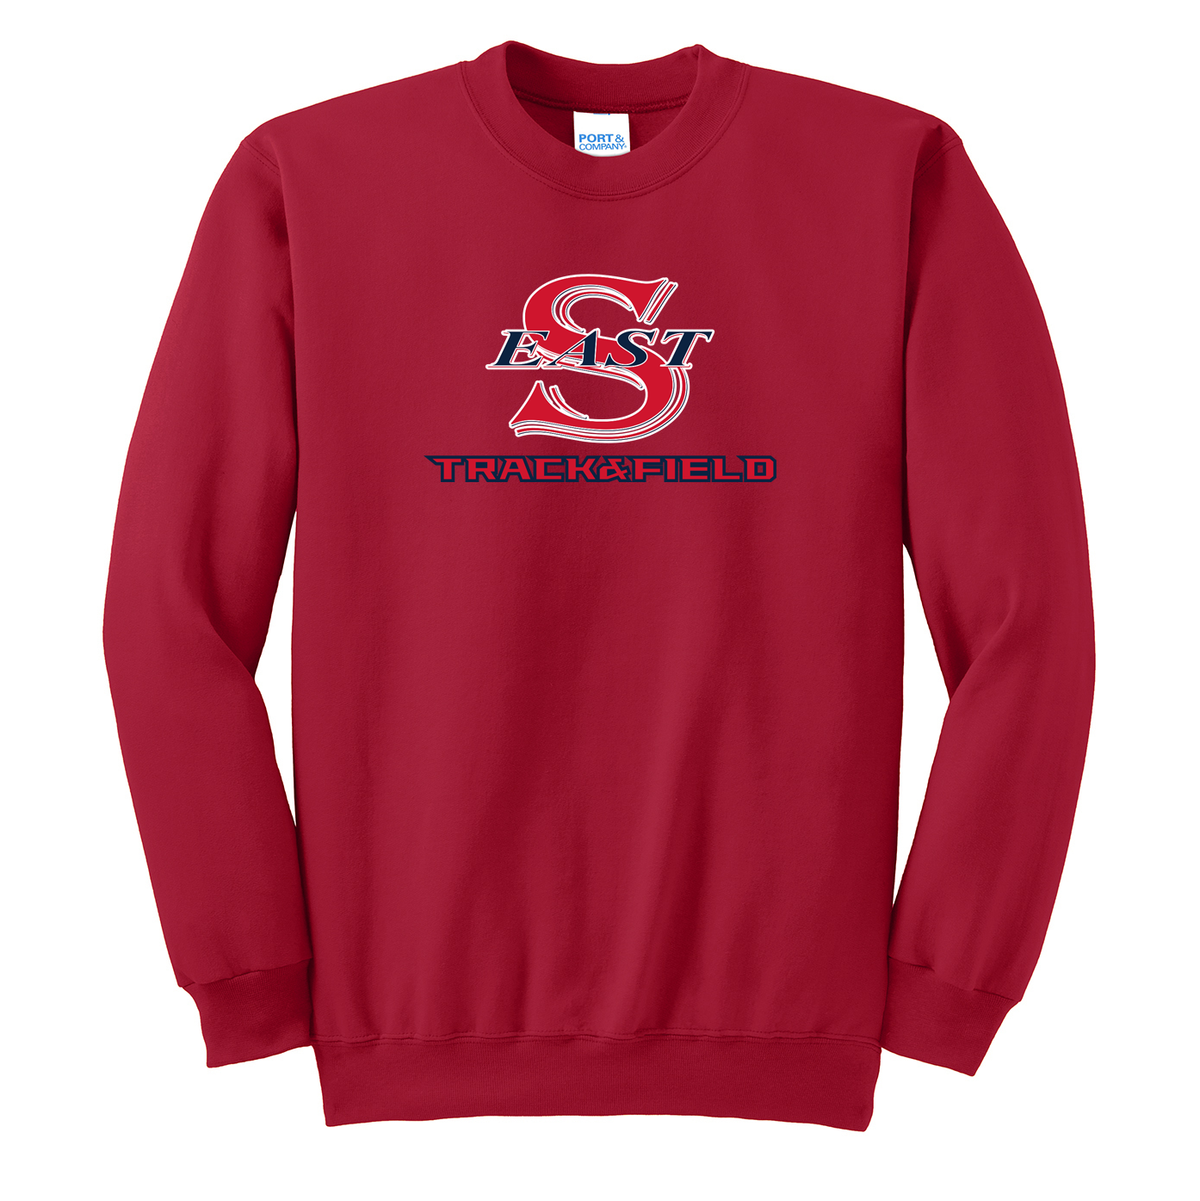 Smithtown East T&FCrew Neck Sweater